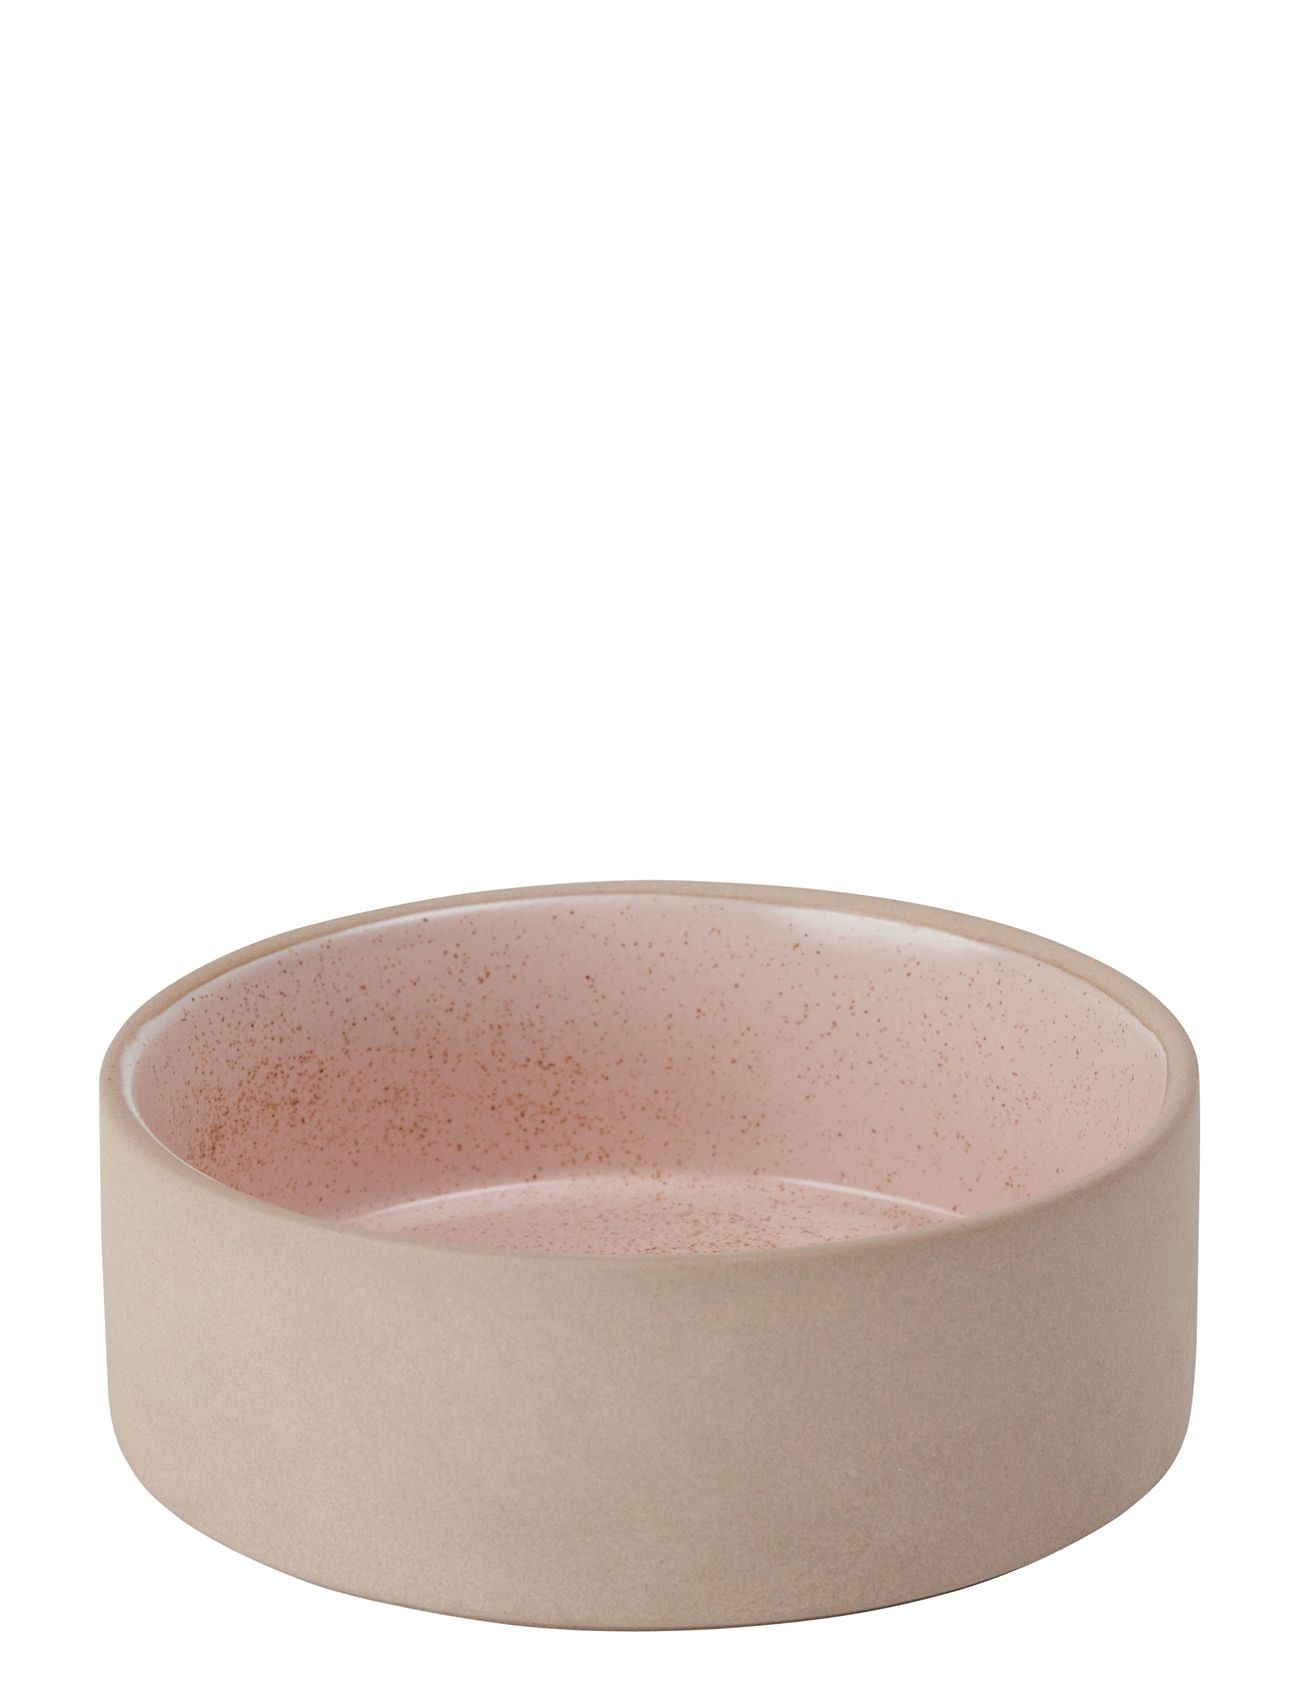 Sia Dog Bowl Home Pets Food Bowls Pink OYOY Living Design